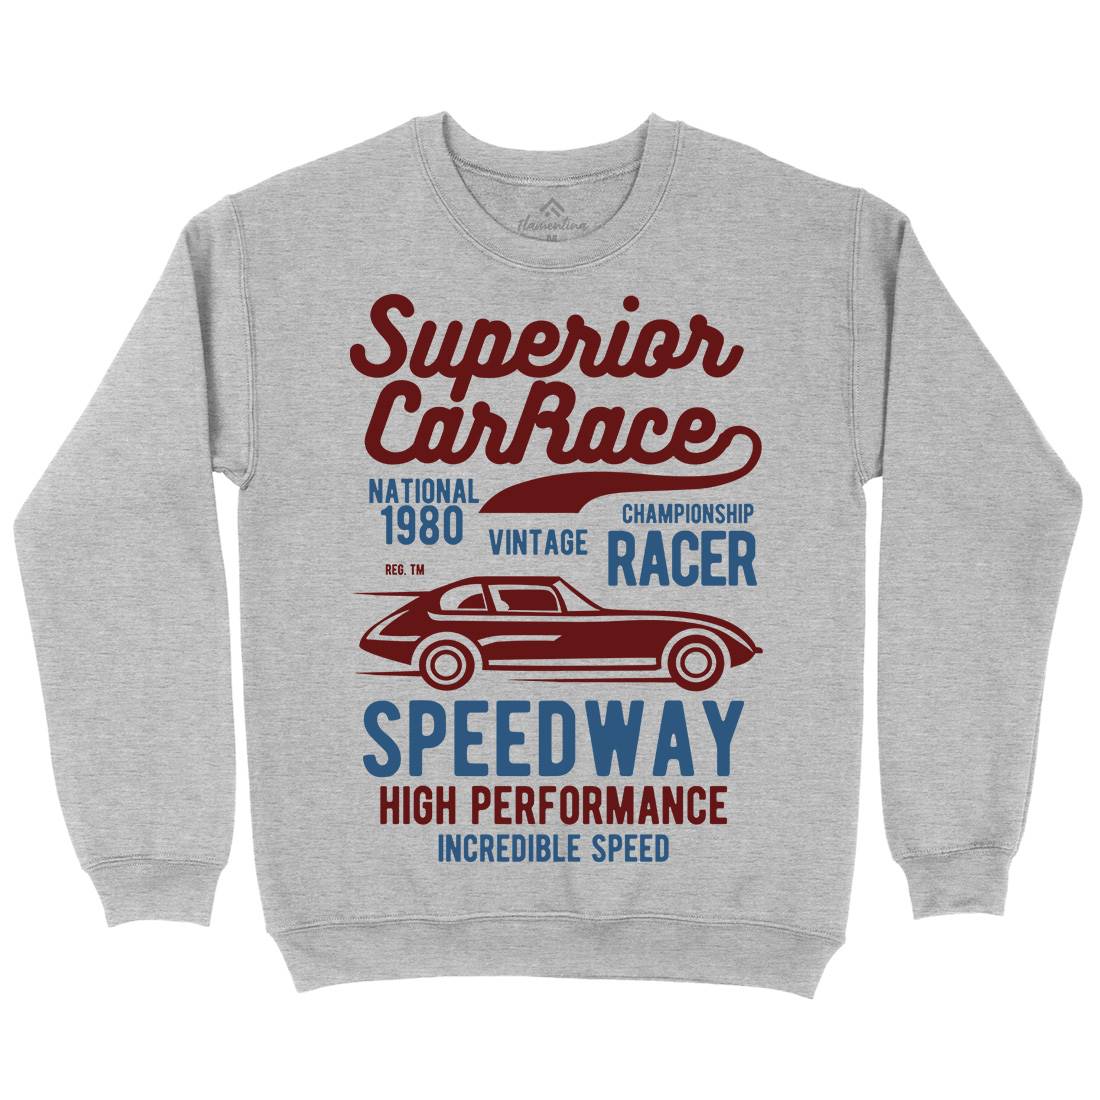 Superior Car Race Mens Crew Neck Sweatshirt Cars B456